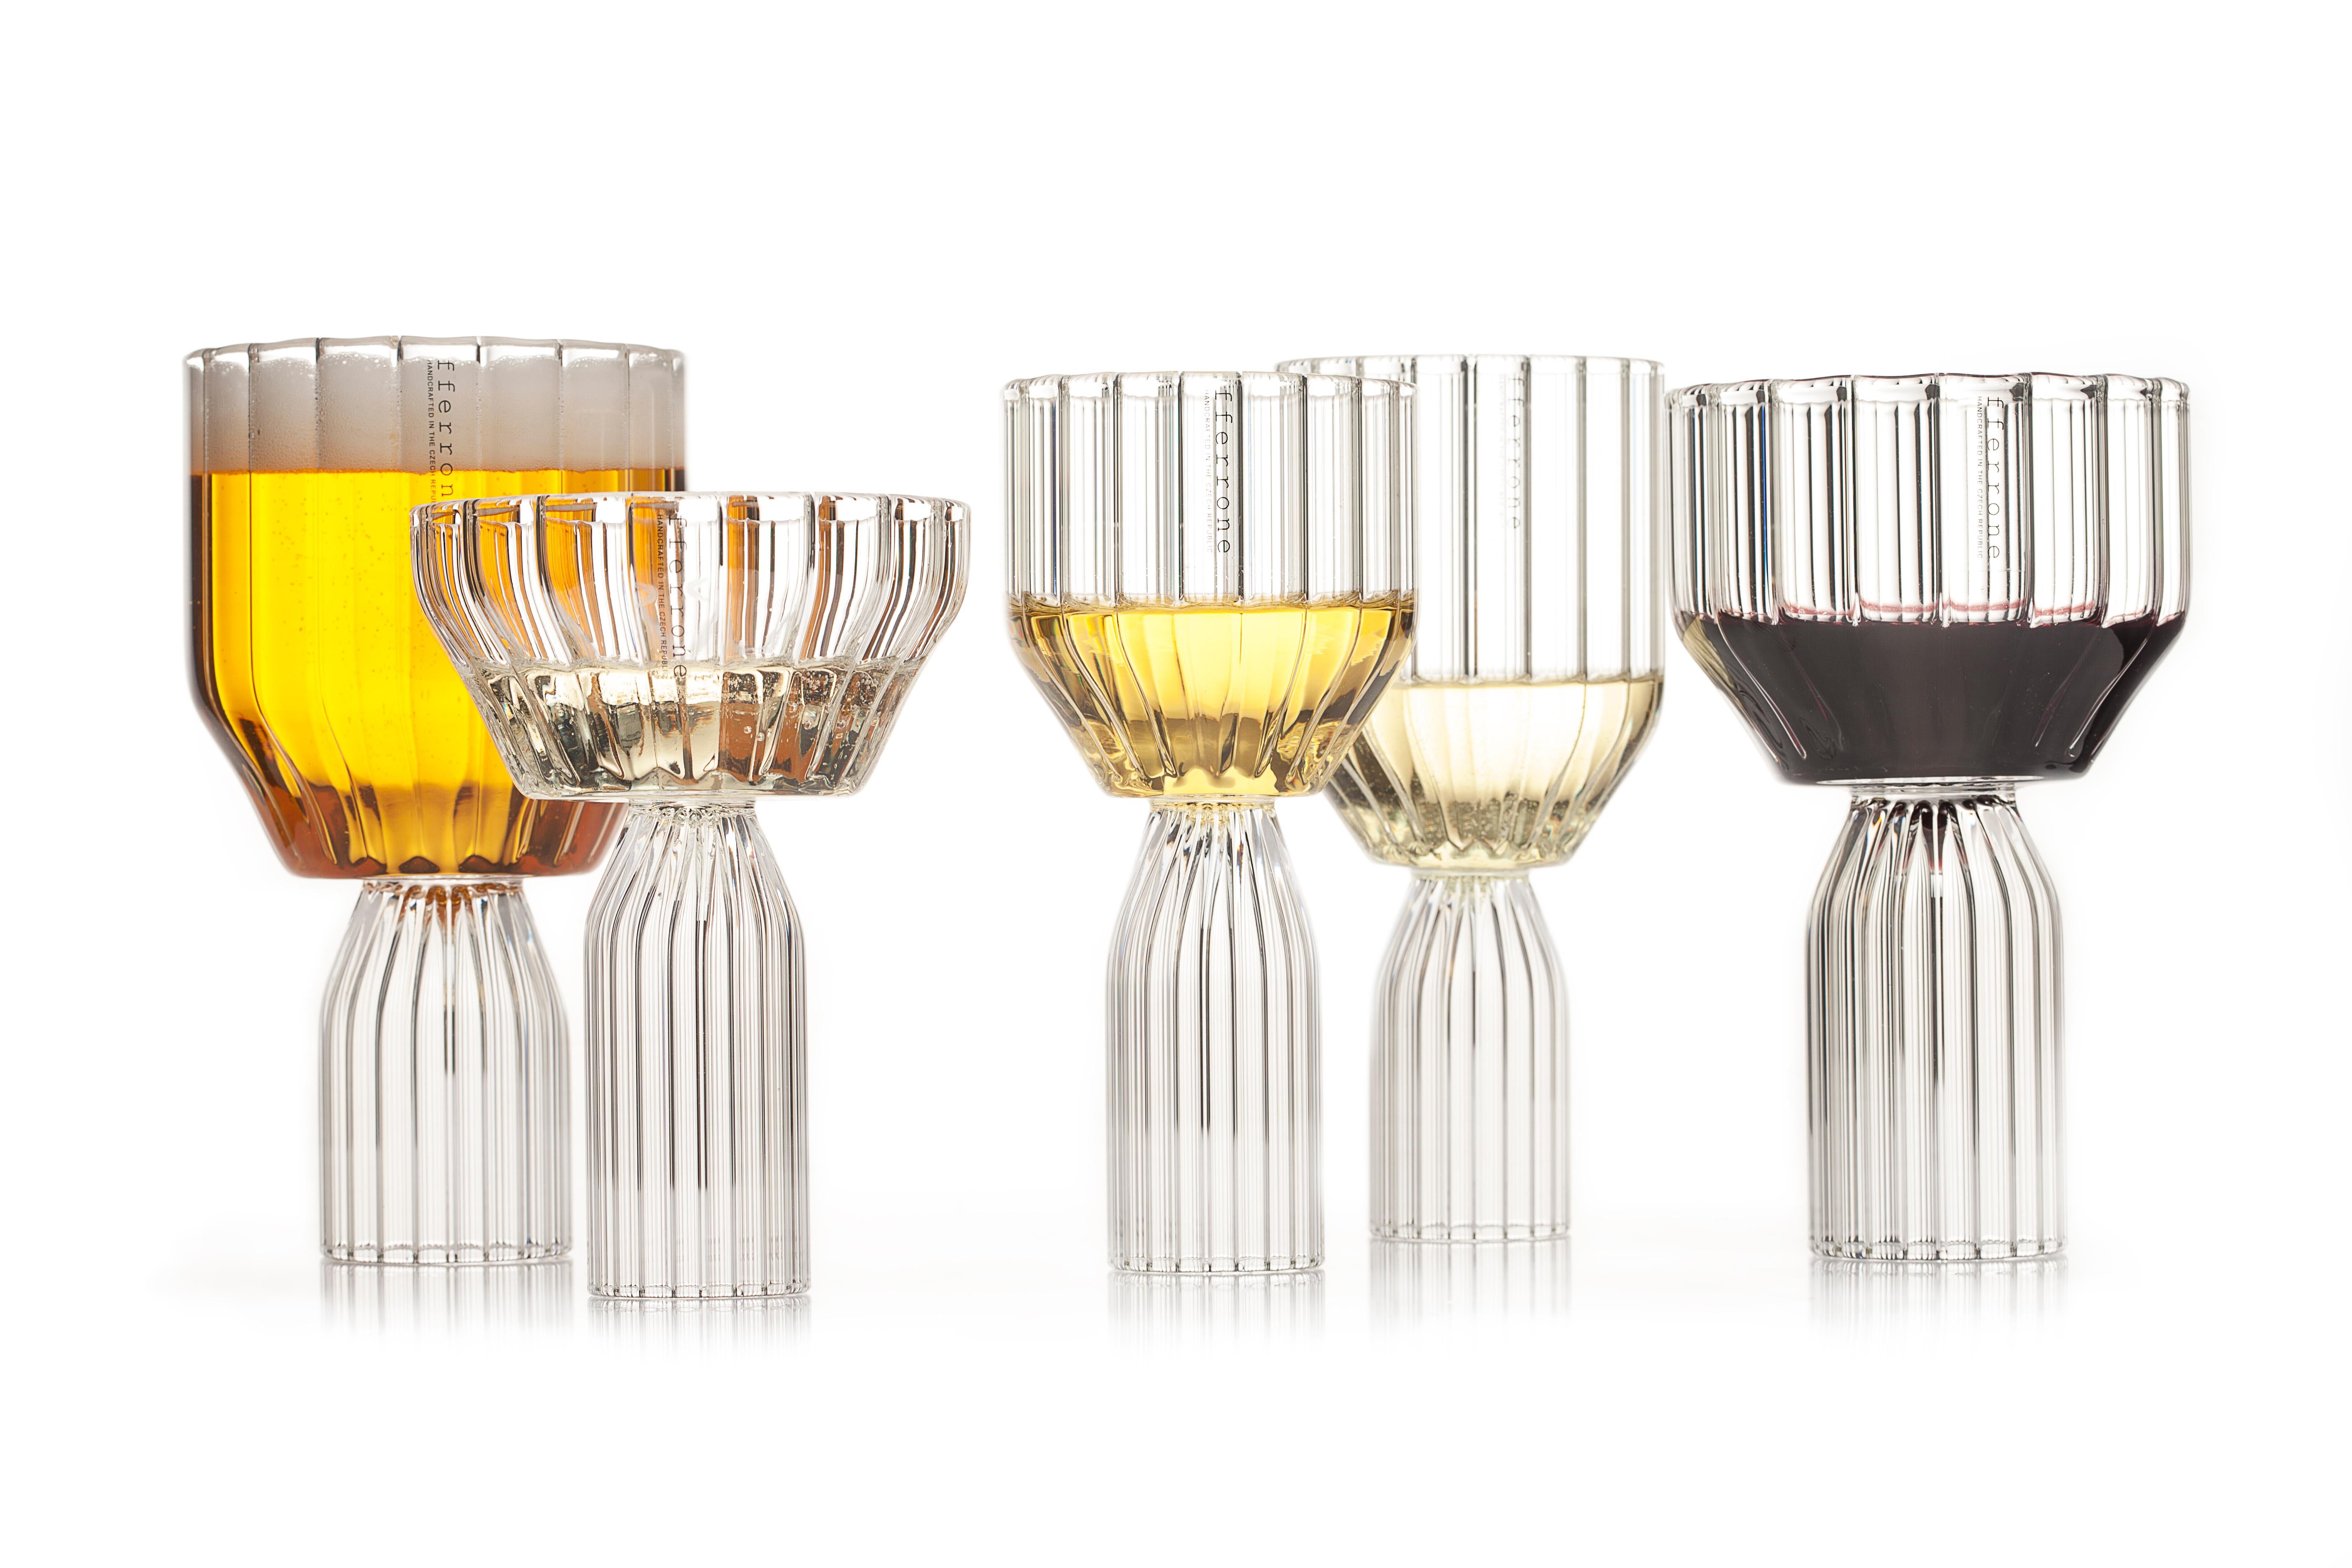 Czech EU Clients Pair of Contemporary Medium Goblet Cocktail Glass Handmade in Stock